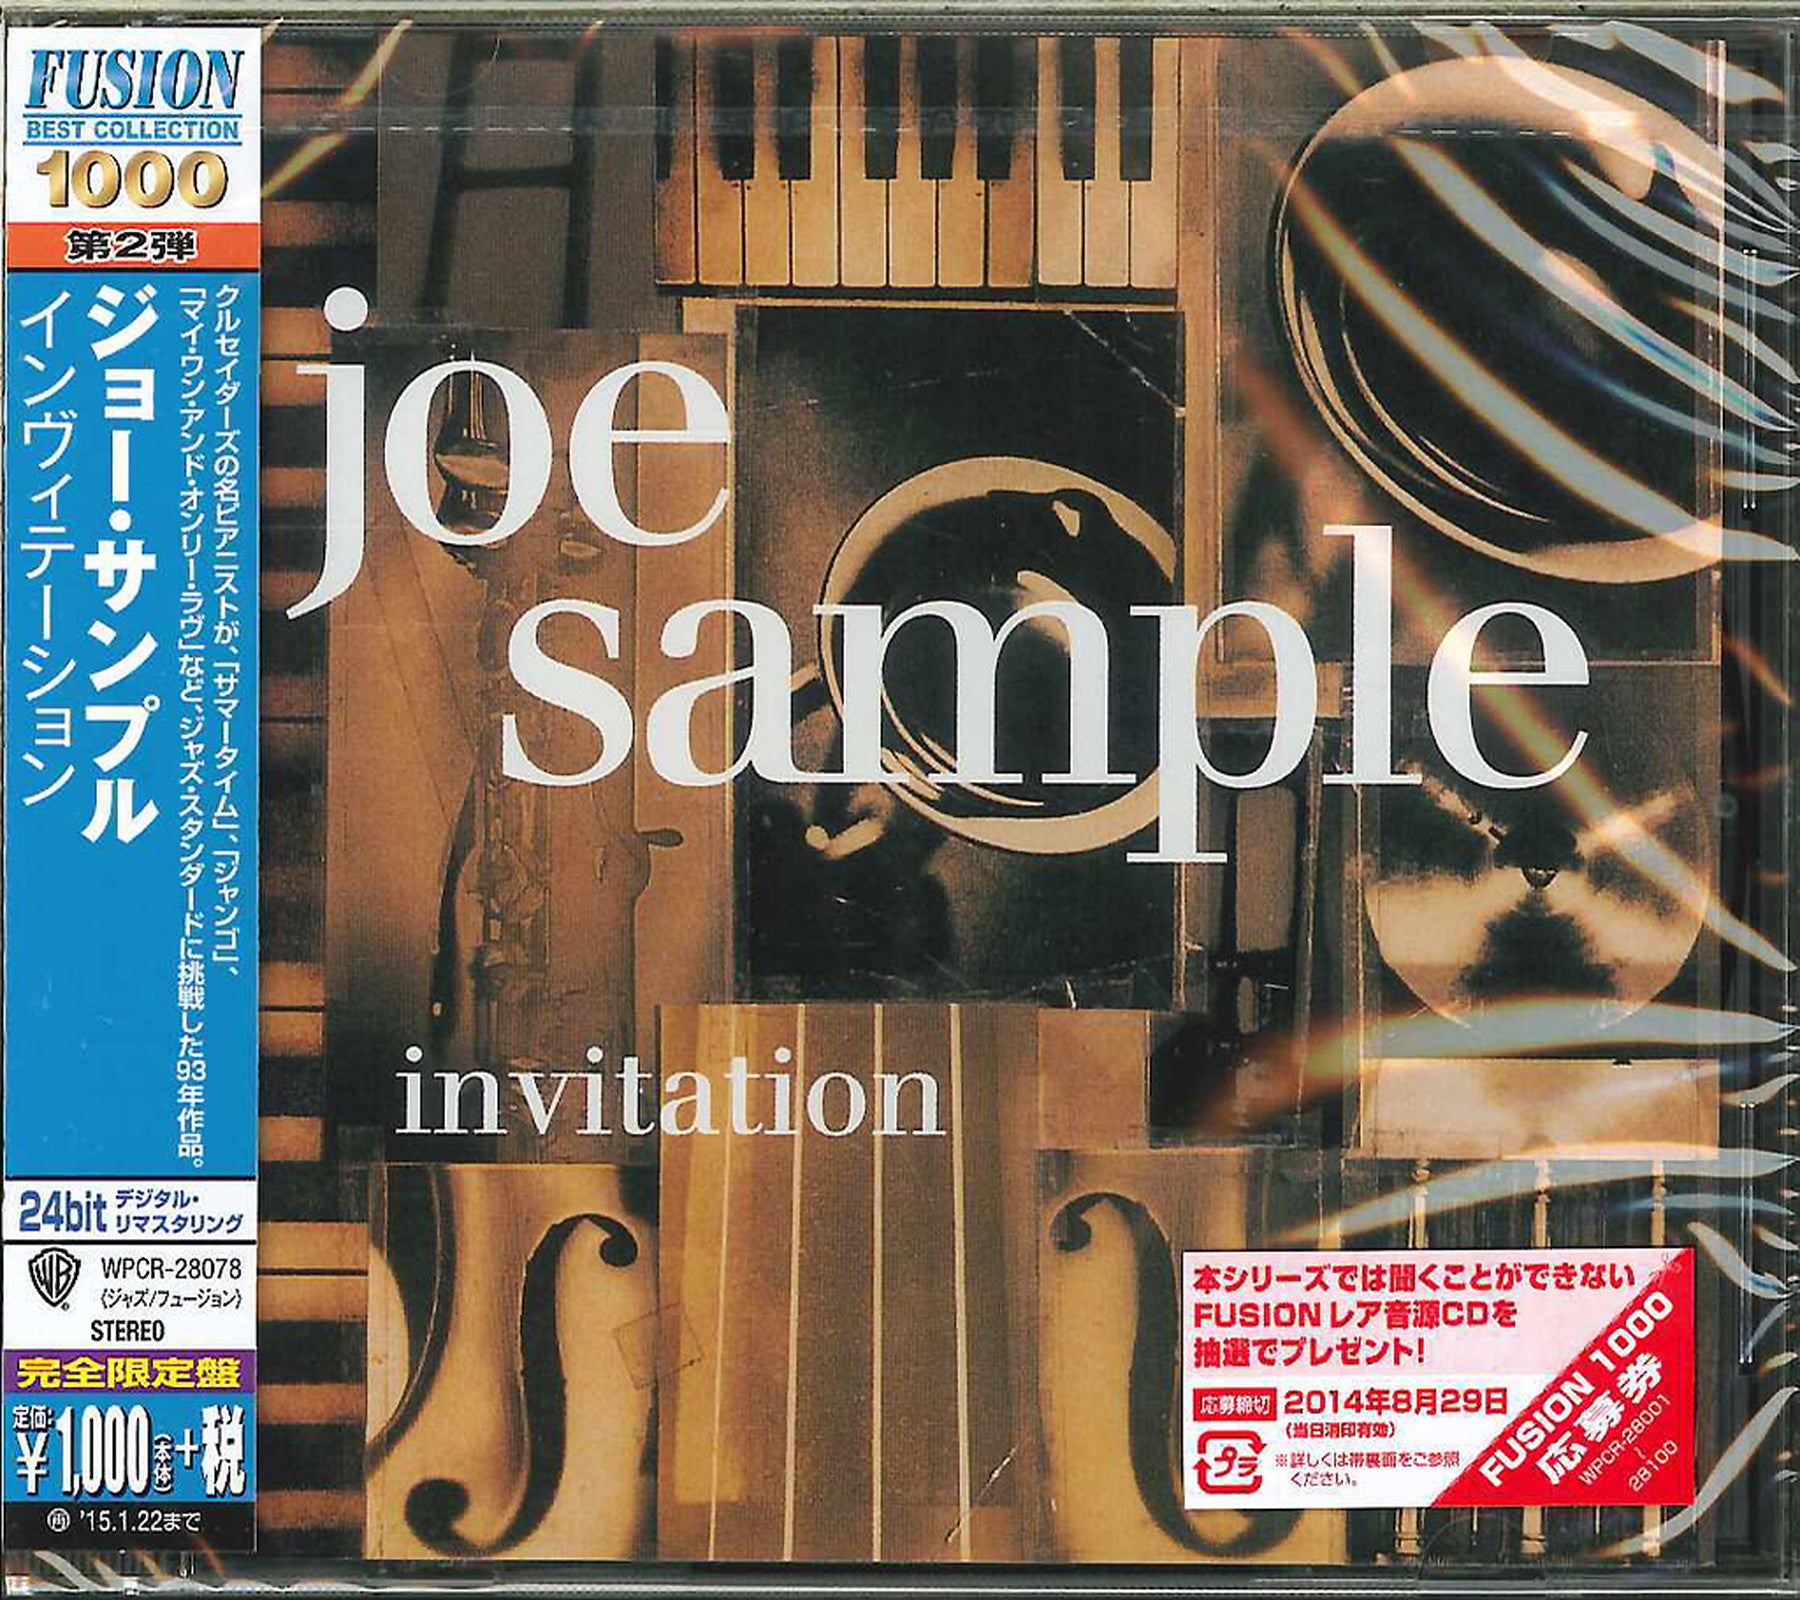 Joe Sample - Invitation - Japan CD Limited Edition - CDs Vinyl